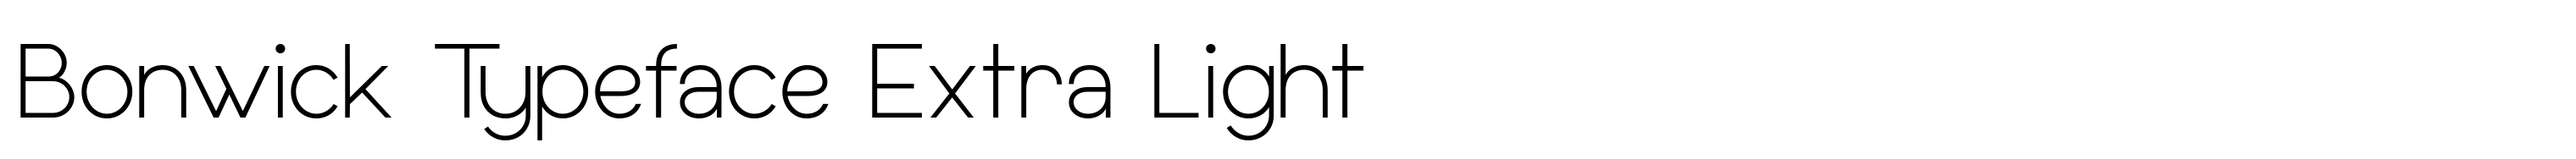 Bonwick Typeface Extra Light